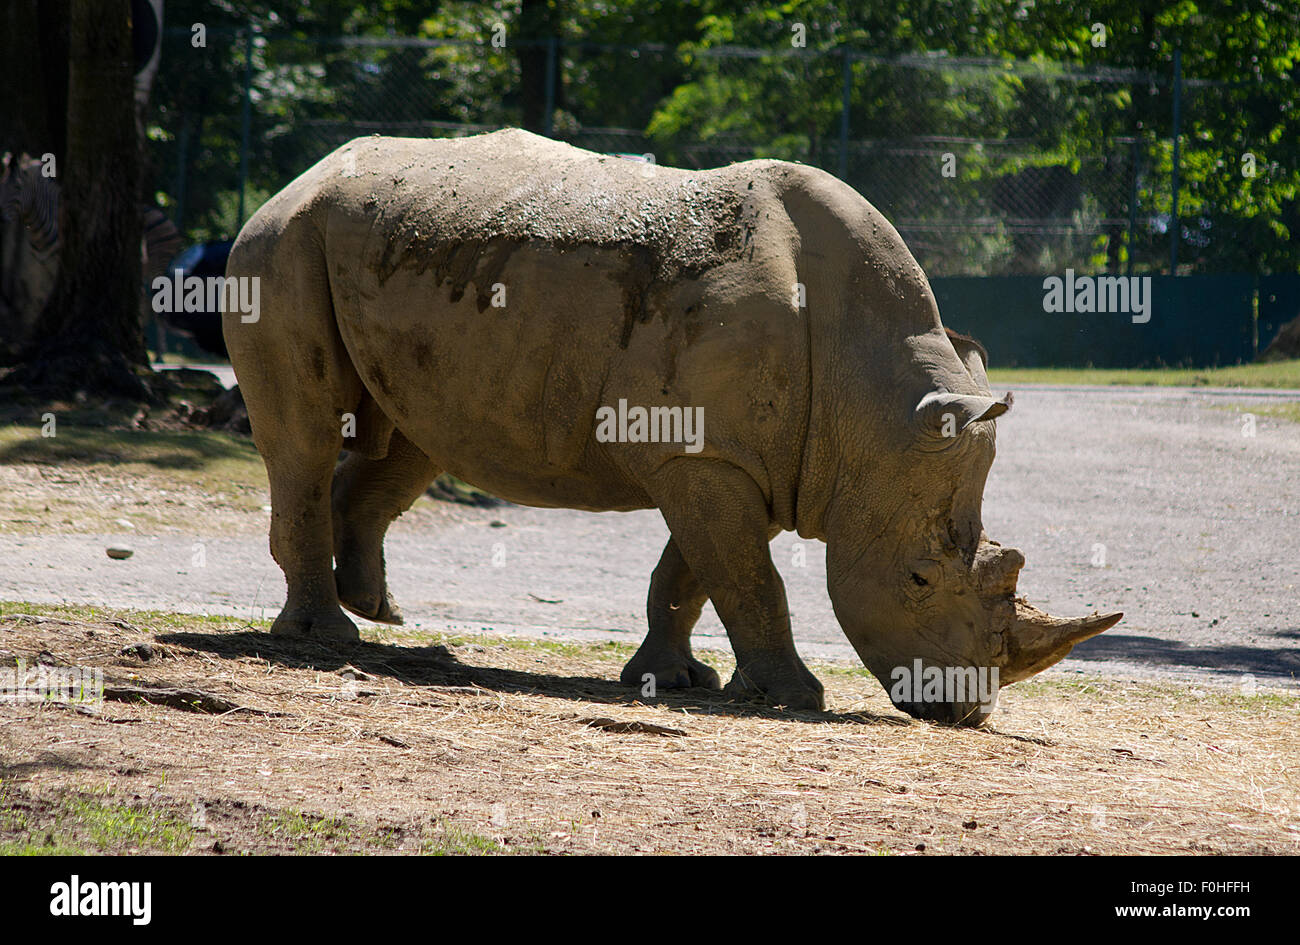 Museau rhinocéros dans l'avant-plan, le zoo rhino rhino, mange Banque D'Images